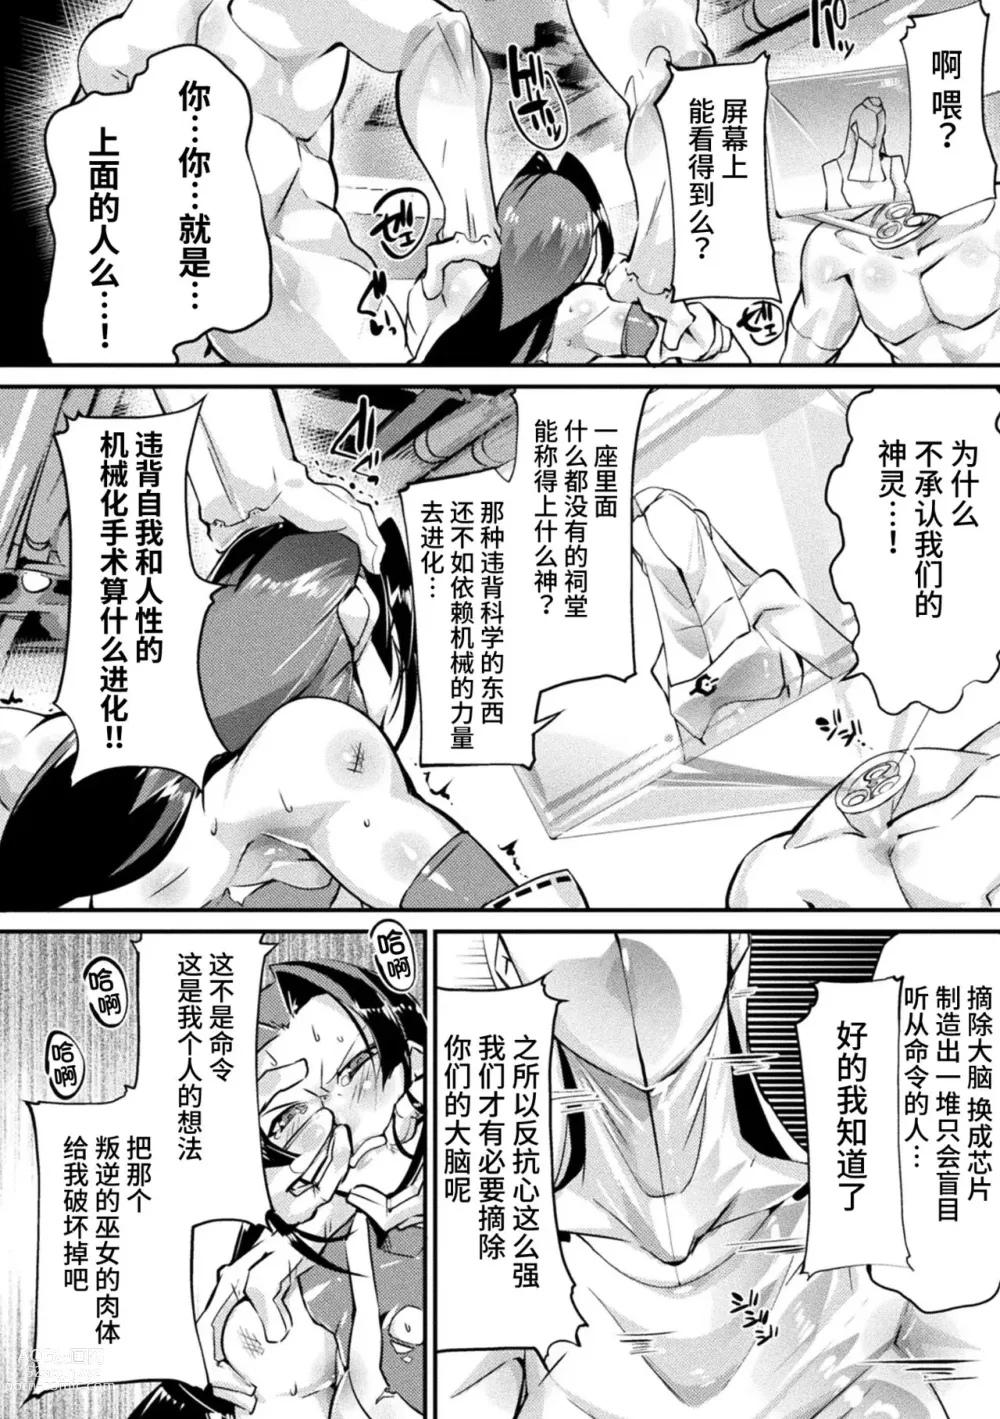 Page 8 of manga Sugo Miko Hitaki